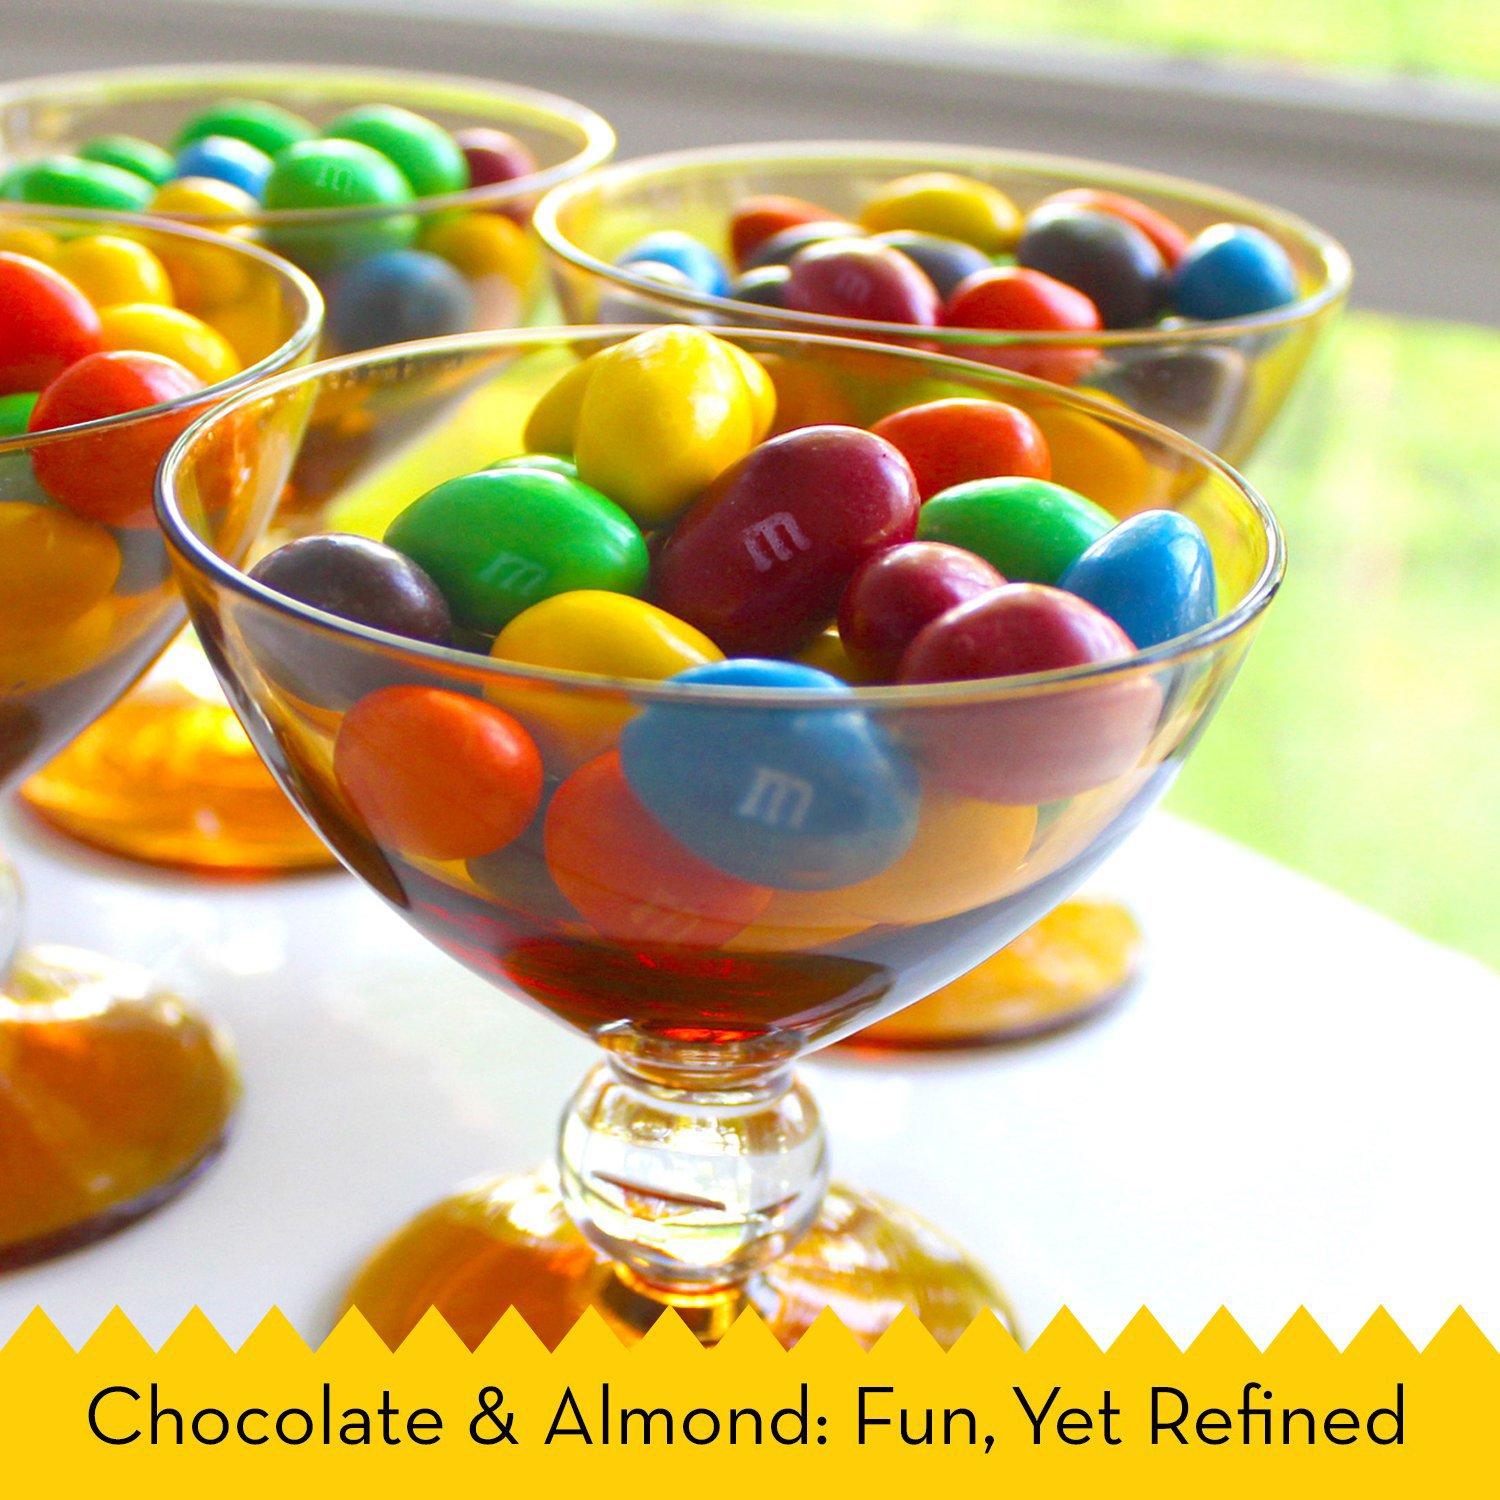 M&M's Almond Chocolate Candies 9.30 oz, Candy